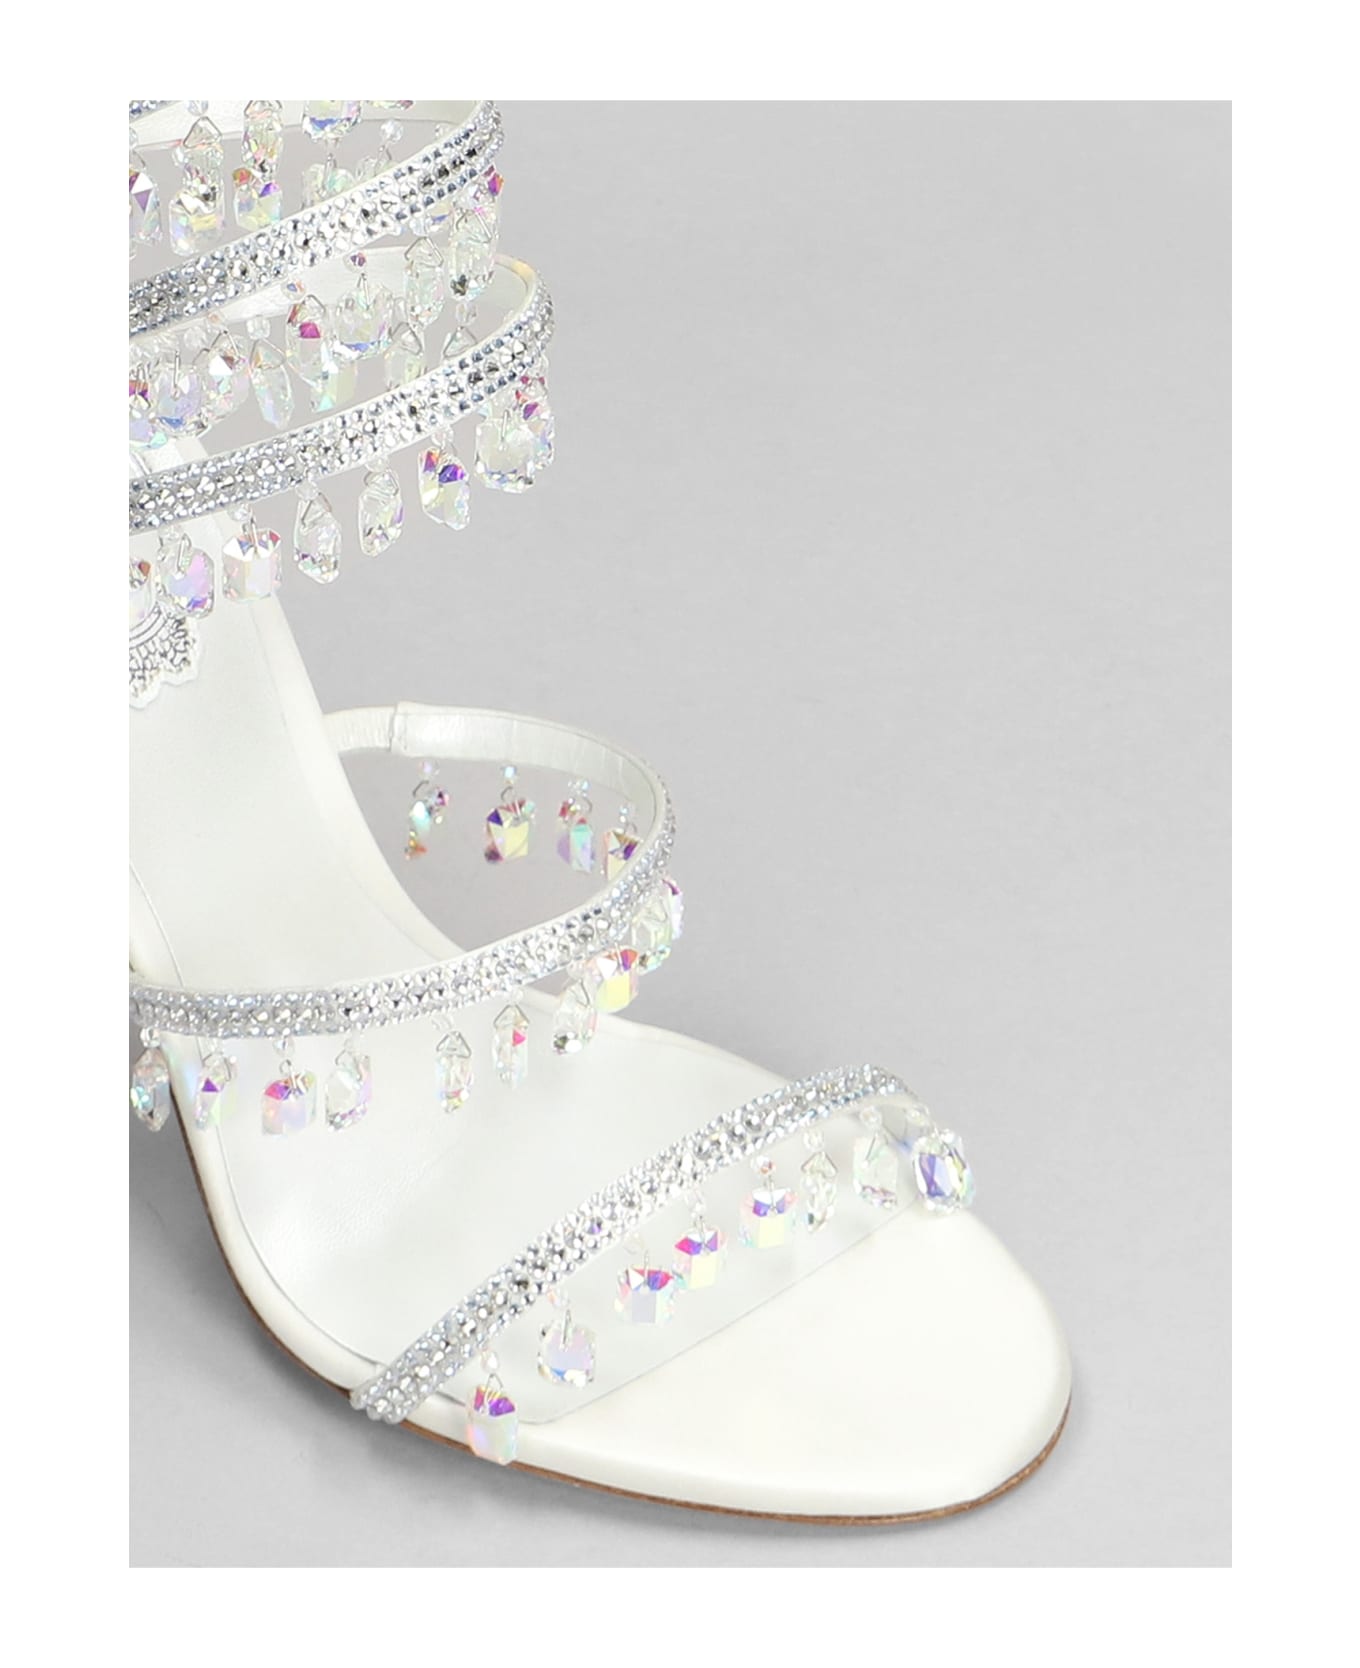 René Caovilla Chandelier Sandals In White Leather - white